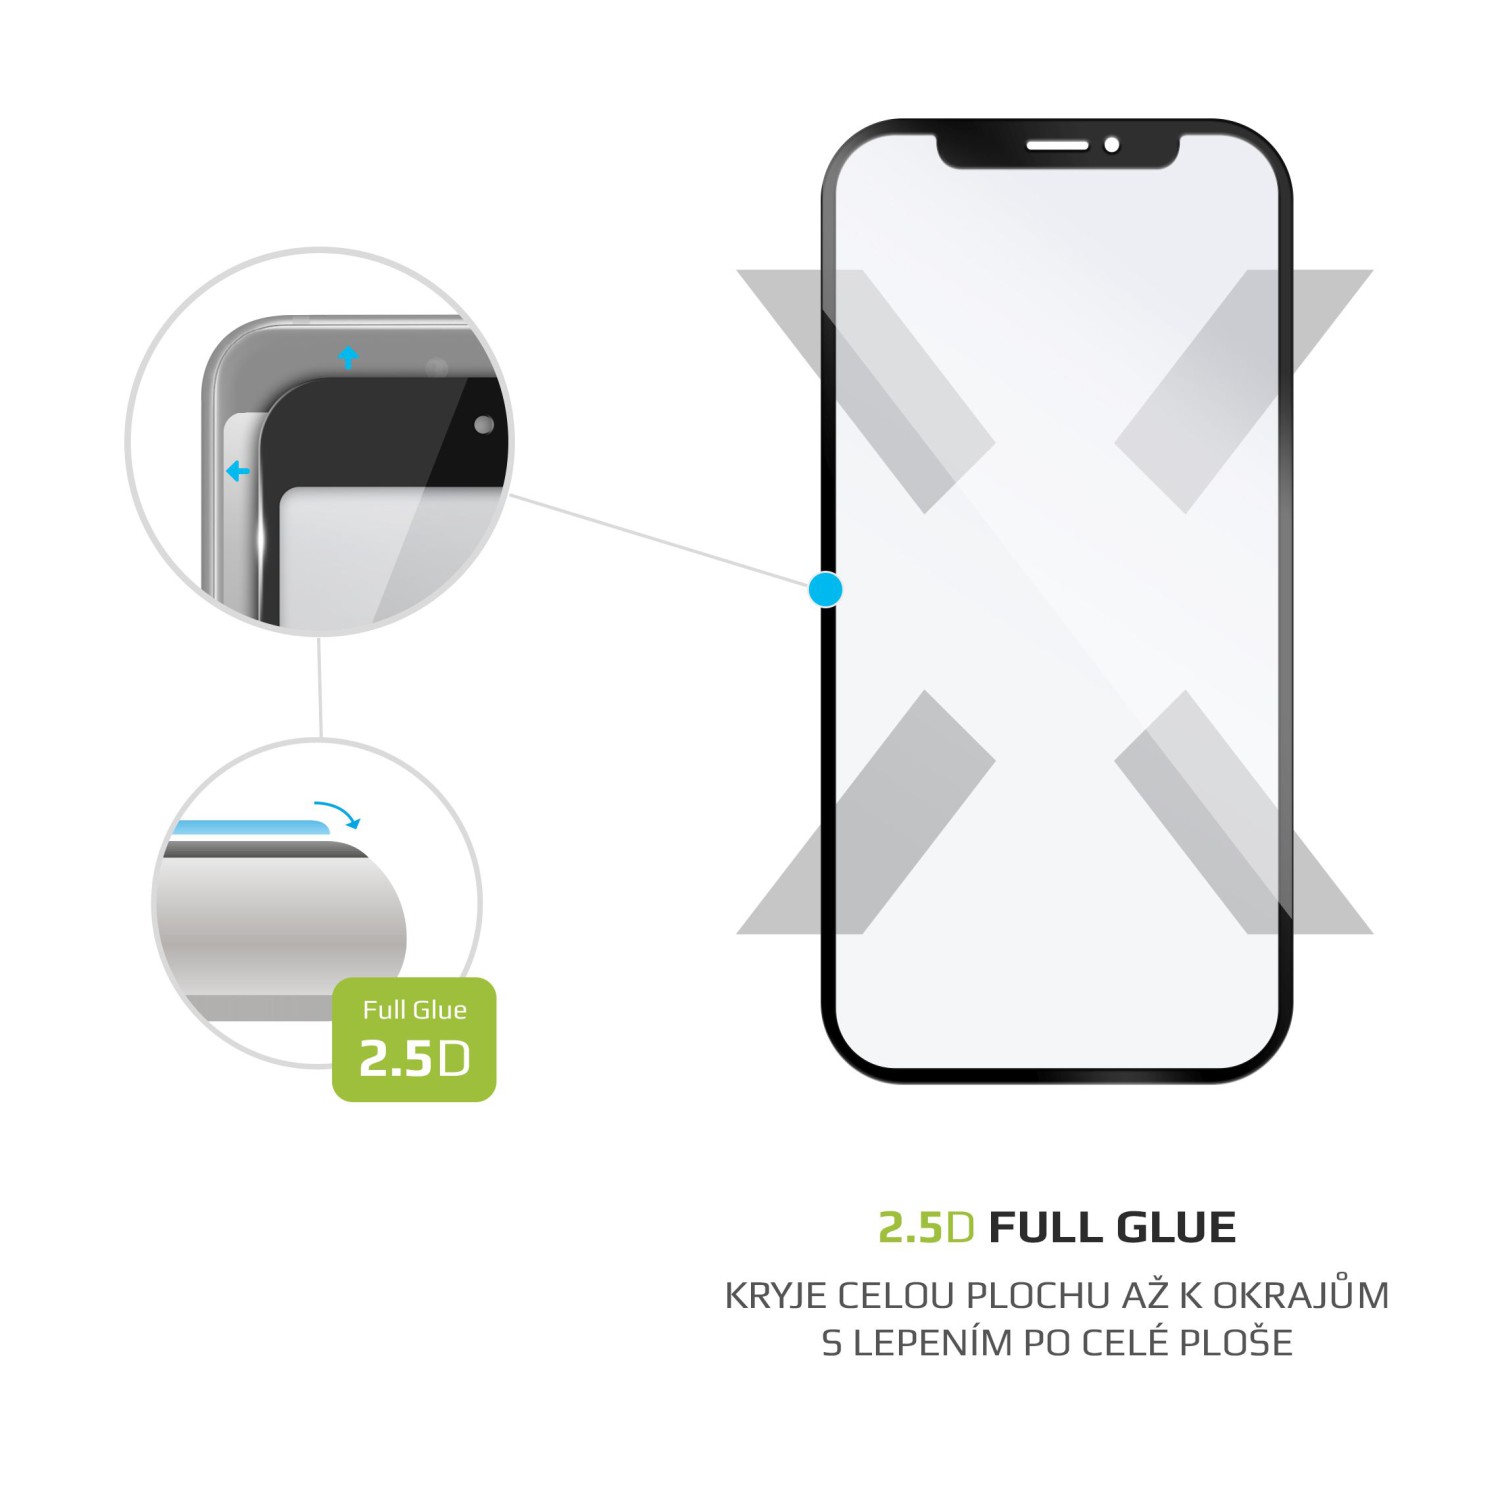 Tvrdené sklo FIXED Full-Cover pre Xiaomi Poco X4 Pro 5G, čierna